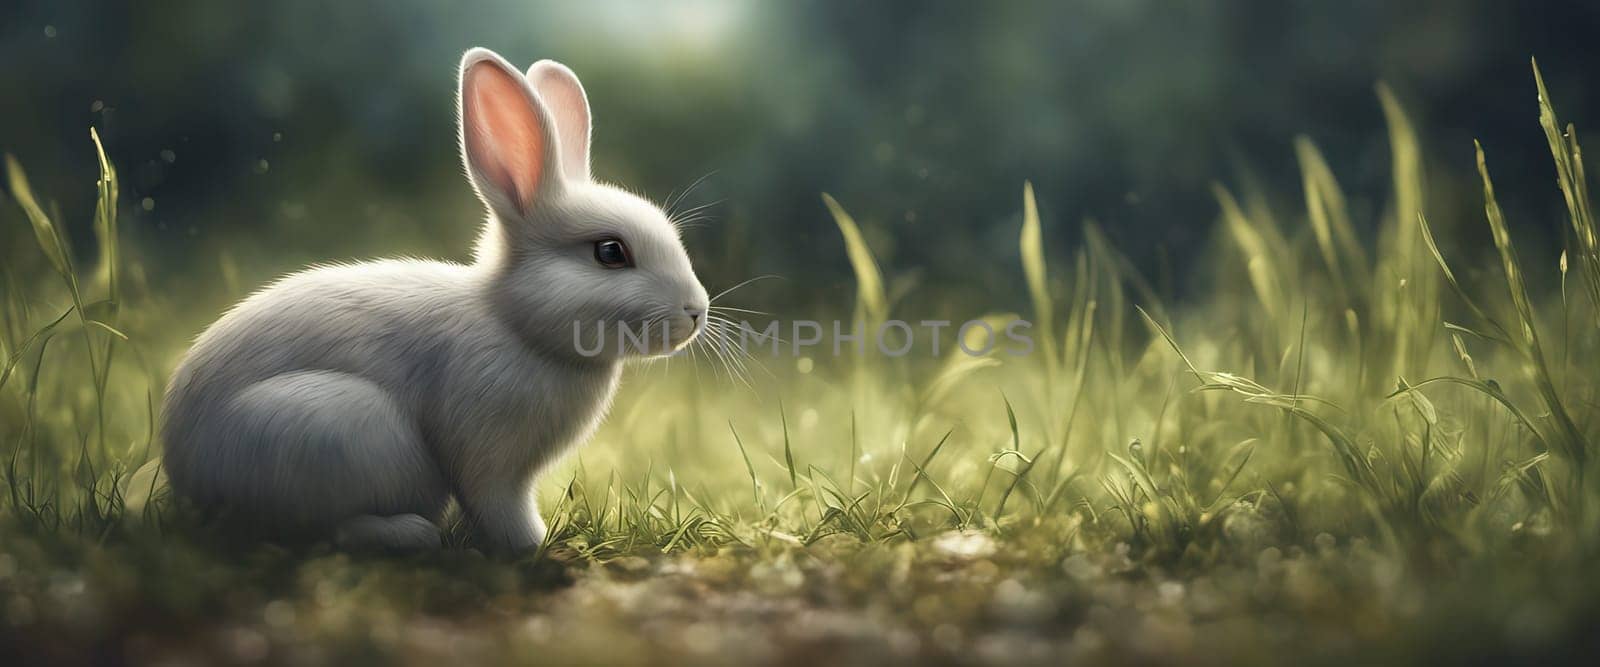 A small rabbit sitting in a field on green grass. by EkaterinaPereslavtseva